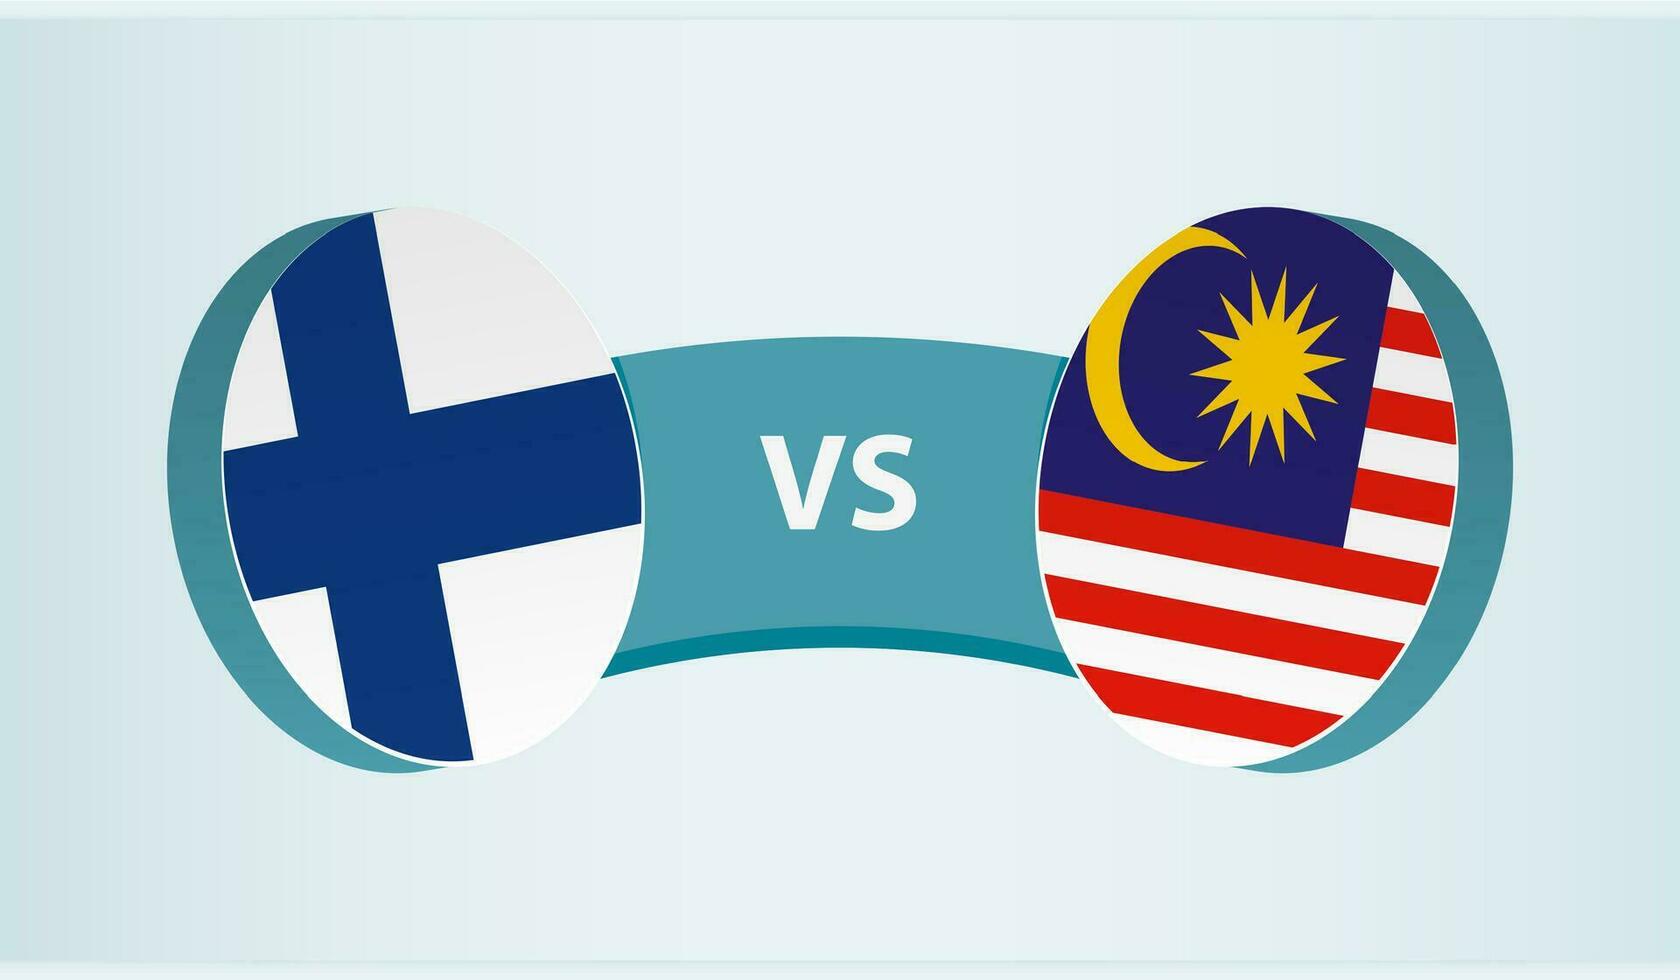 finland mot malaysia, team sporter konkurrens begrepp. vektor